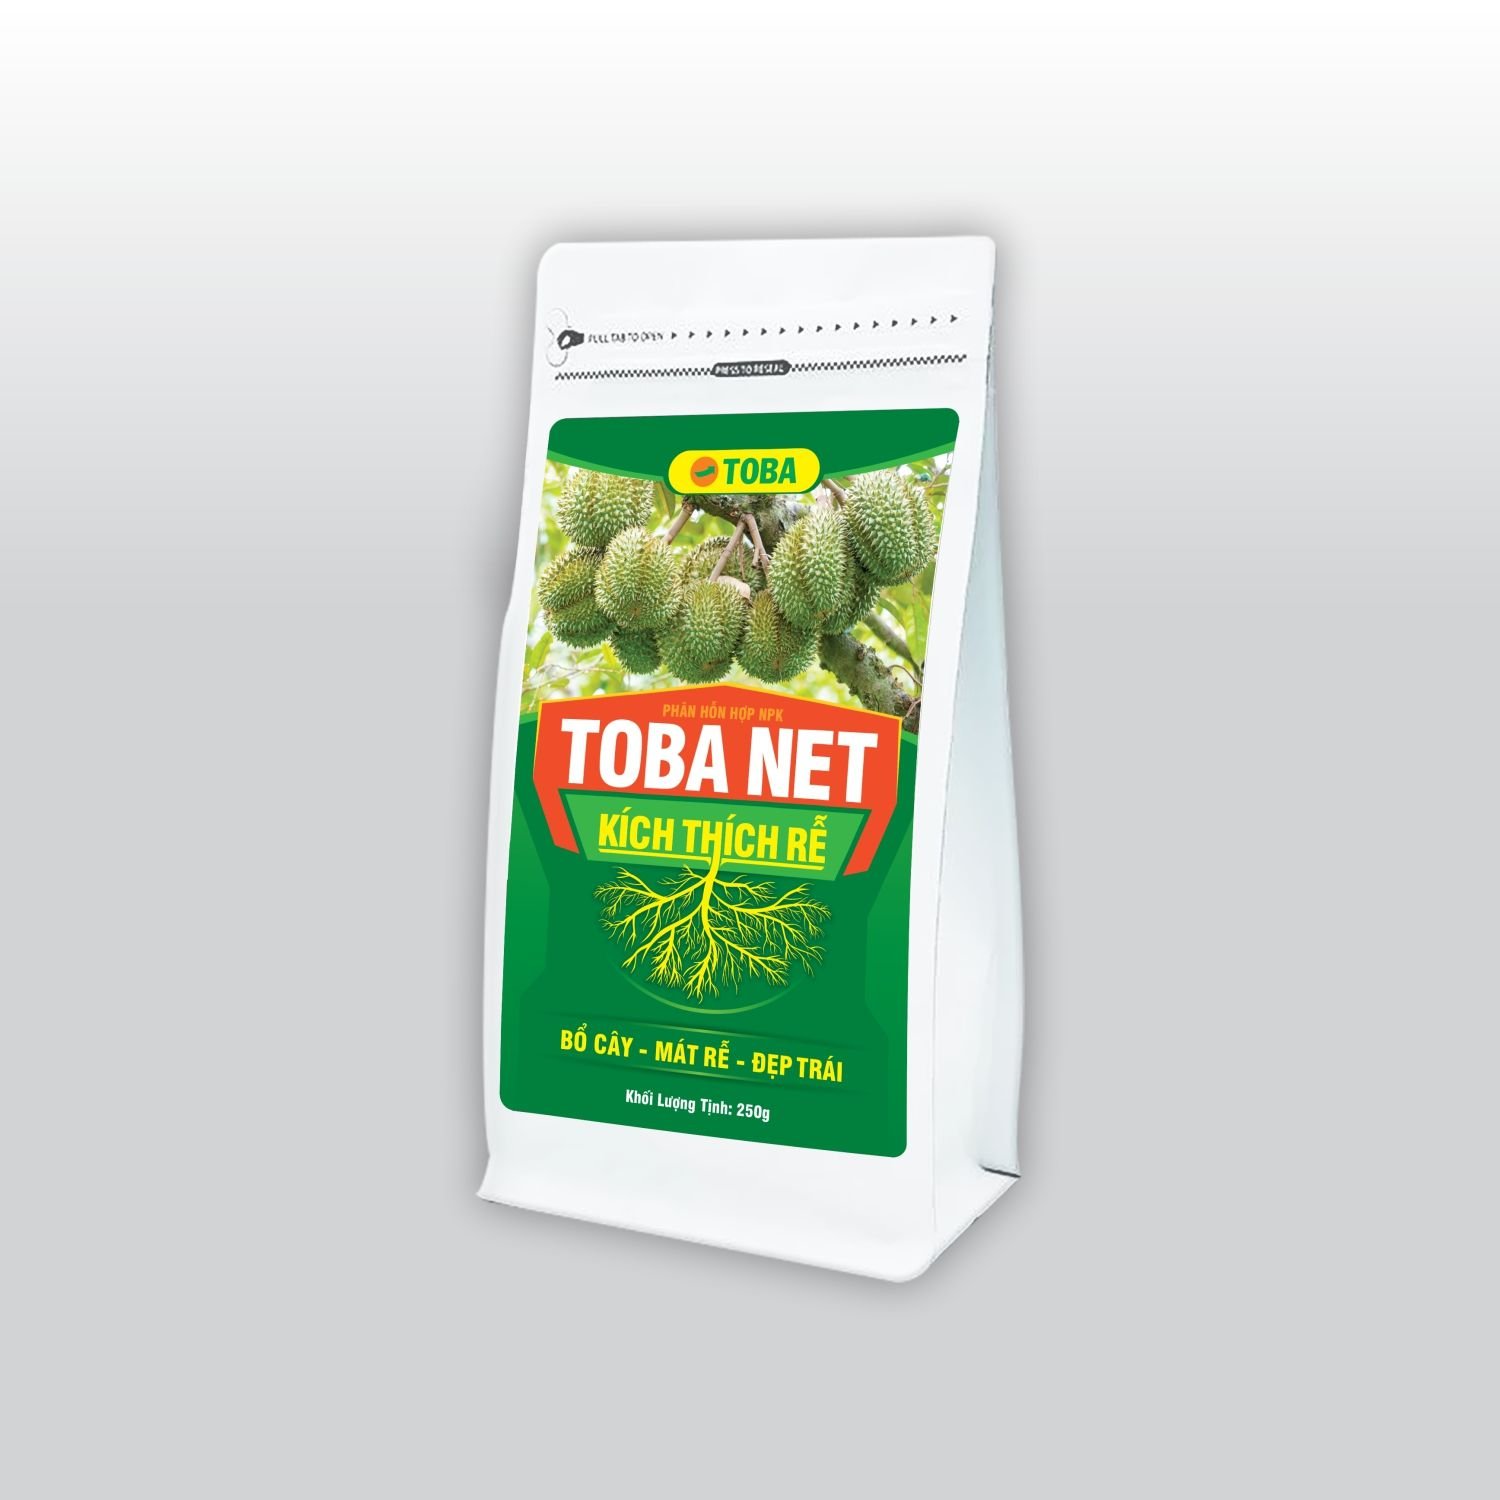 TOBA NET - Gói 250g (NND-NET10)